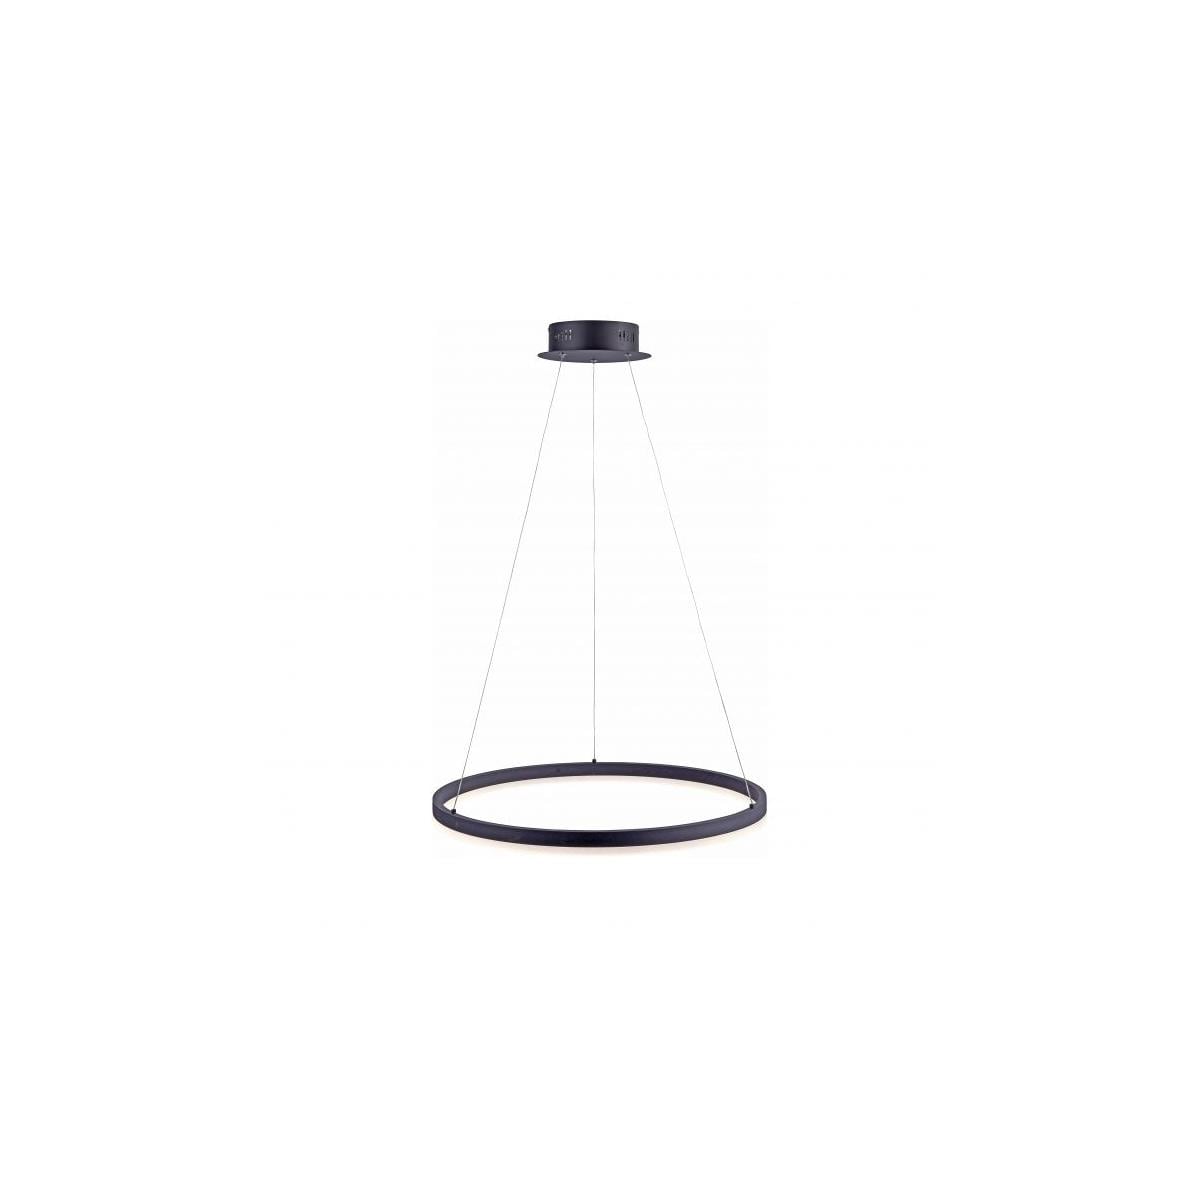 Paul Neuhaus LED Pendelleuchte, anthrazit, runde Form, dimmbar, Memory  Funktion, modern, 38W, 5250lm (2382-13) Elektroshop Wagner